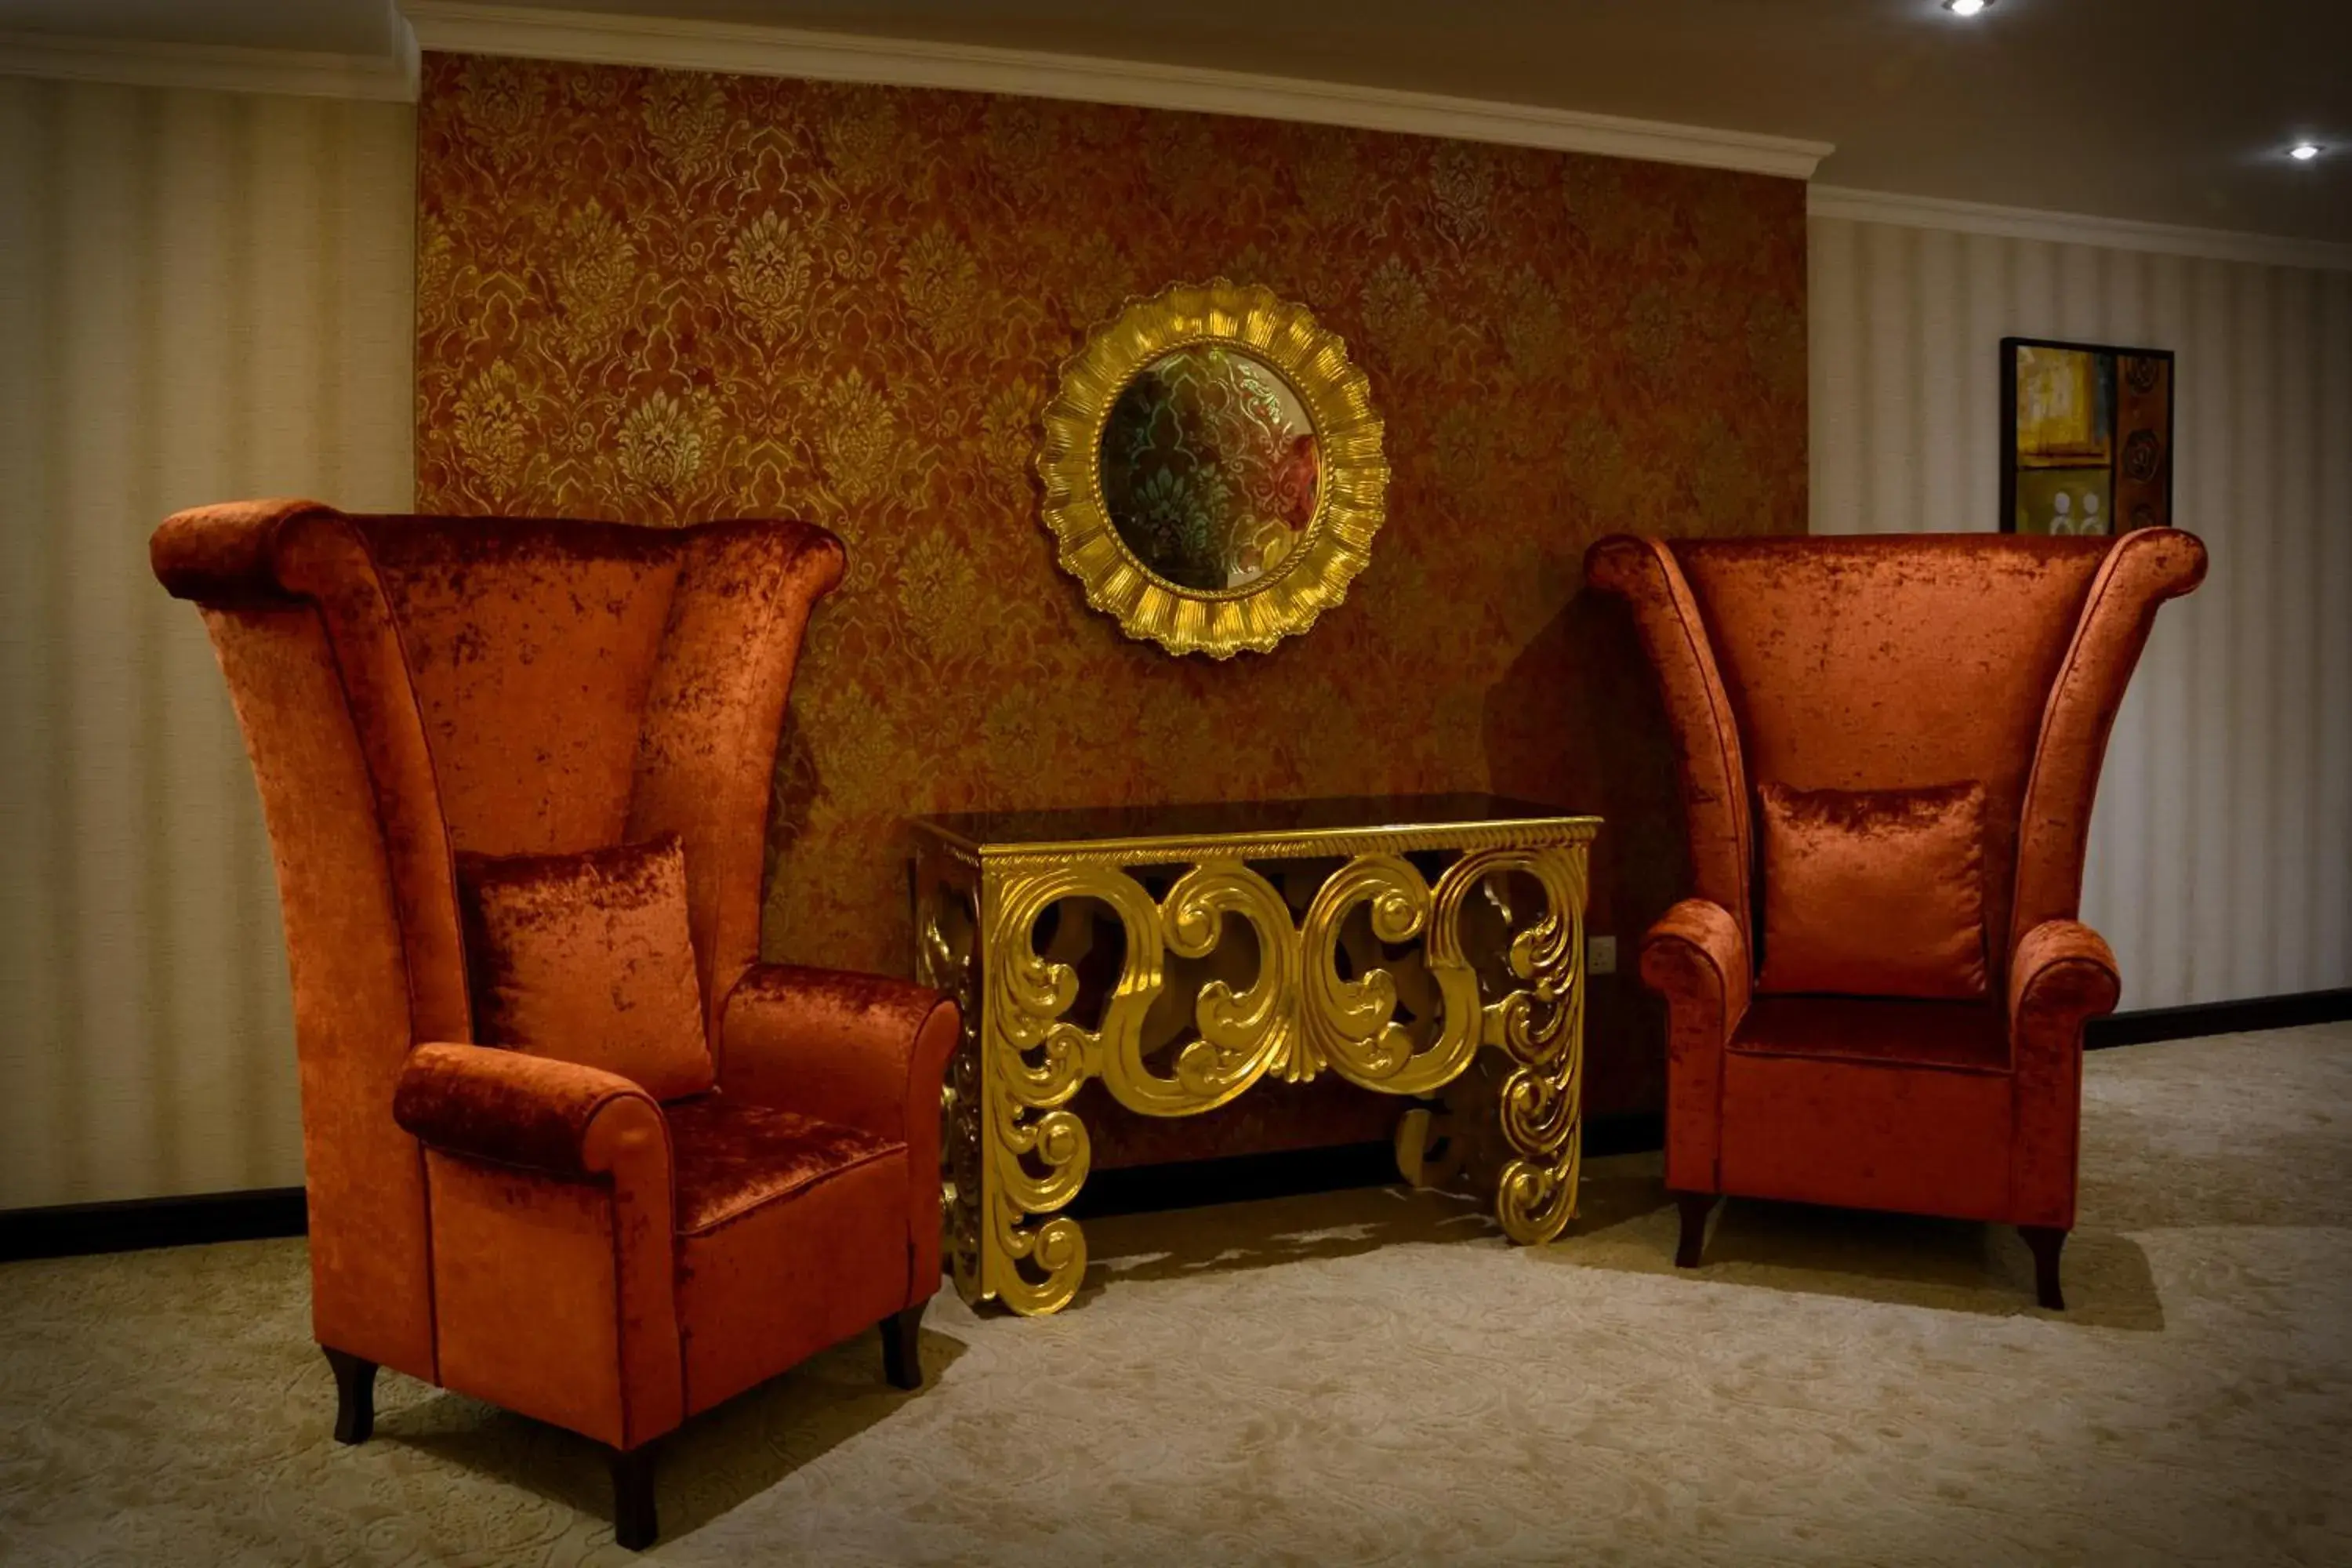 Decorative detail, Seating Area in Golden Ocean Hotel